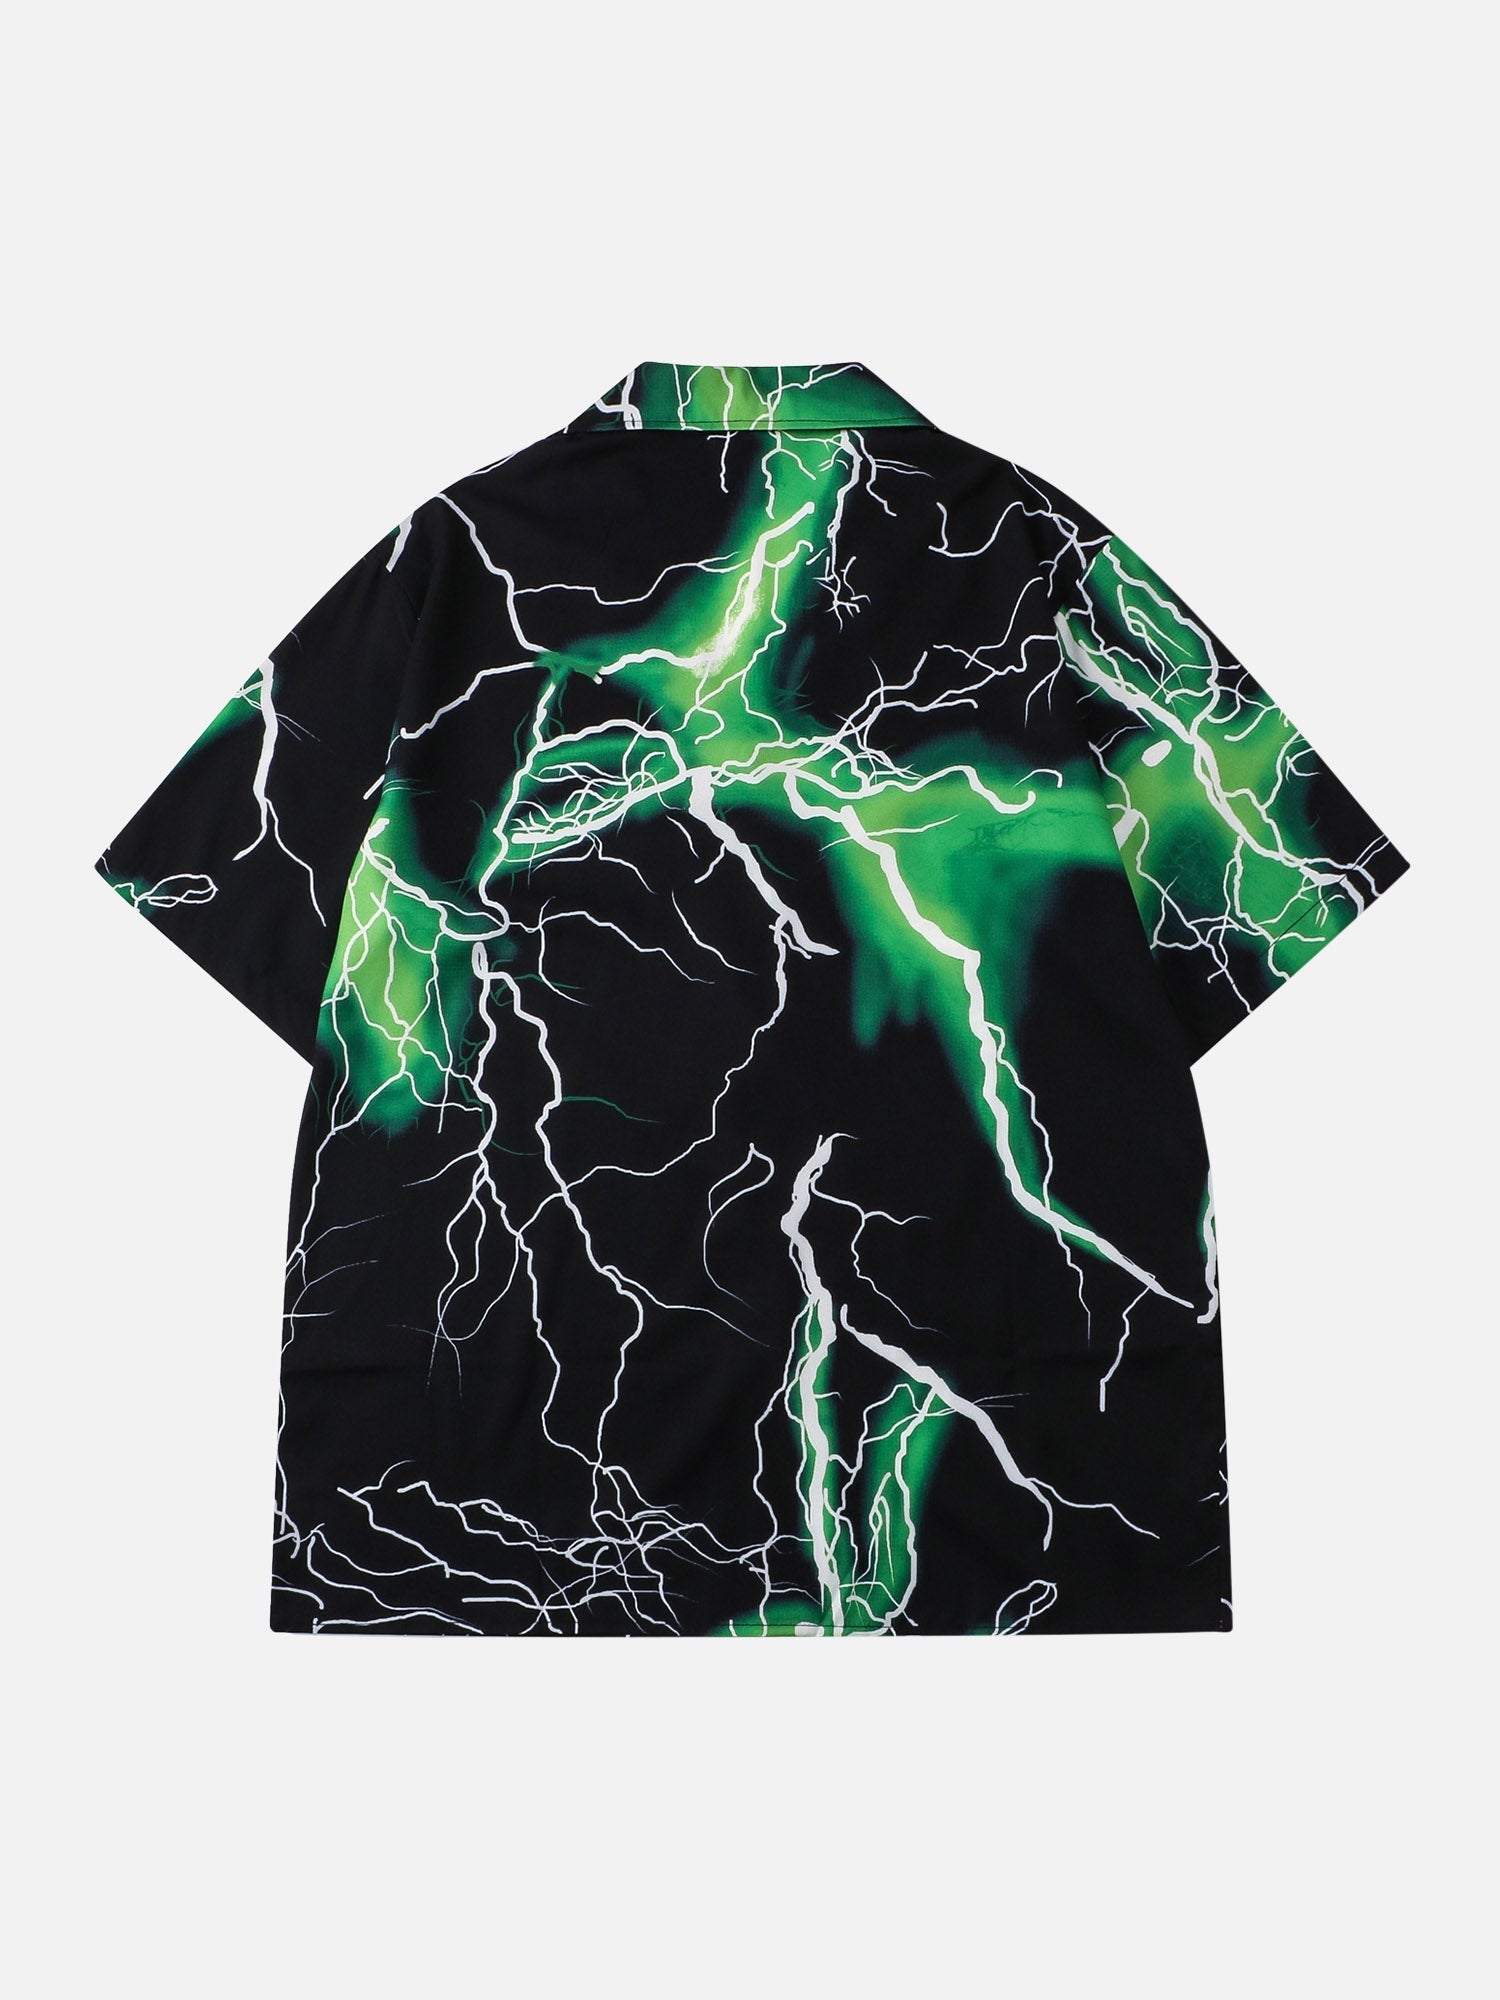 Street Rap Lightning Printed All Over Shirts Short Sets